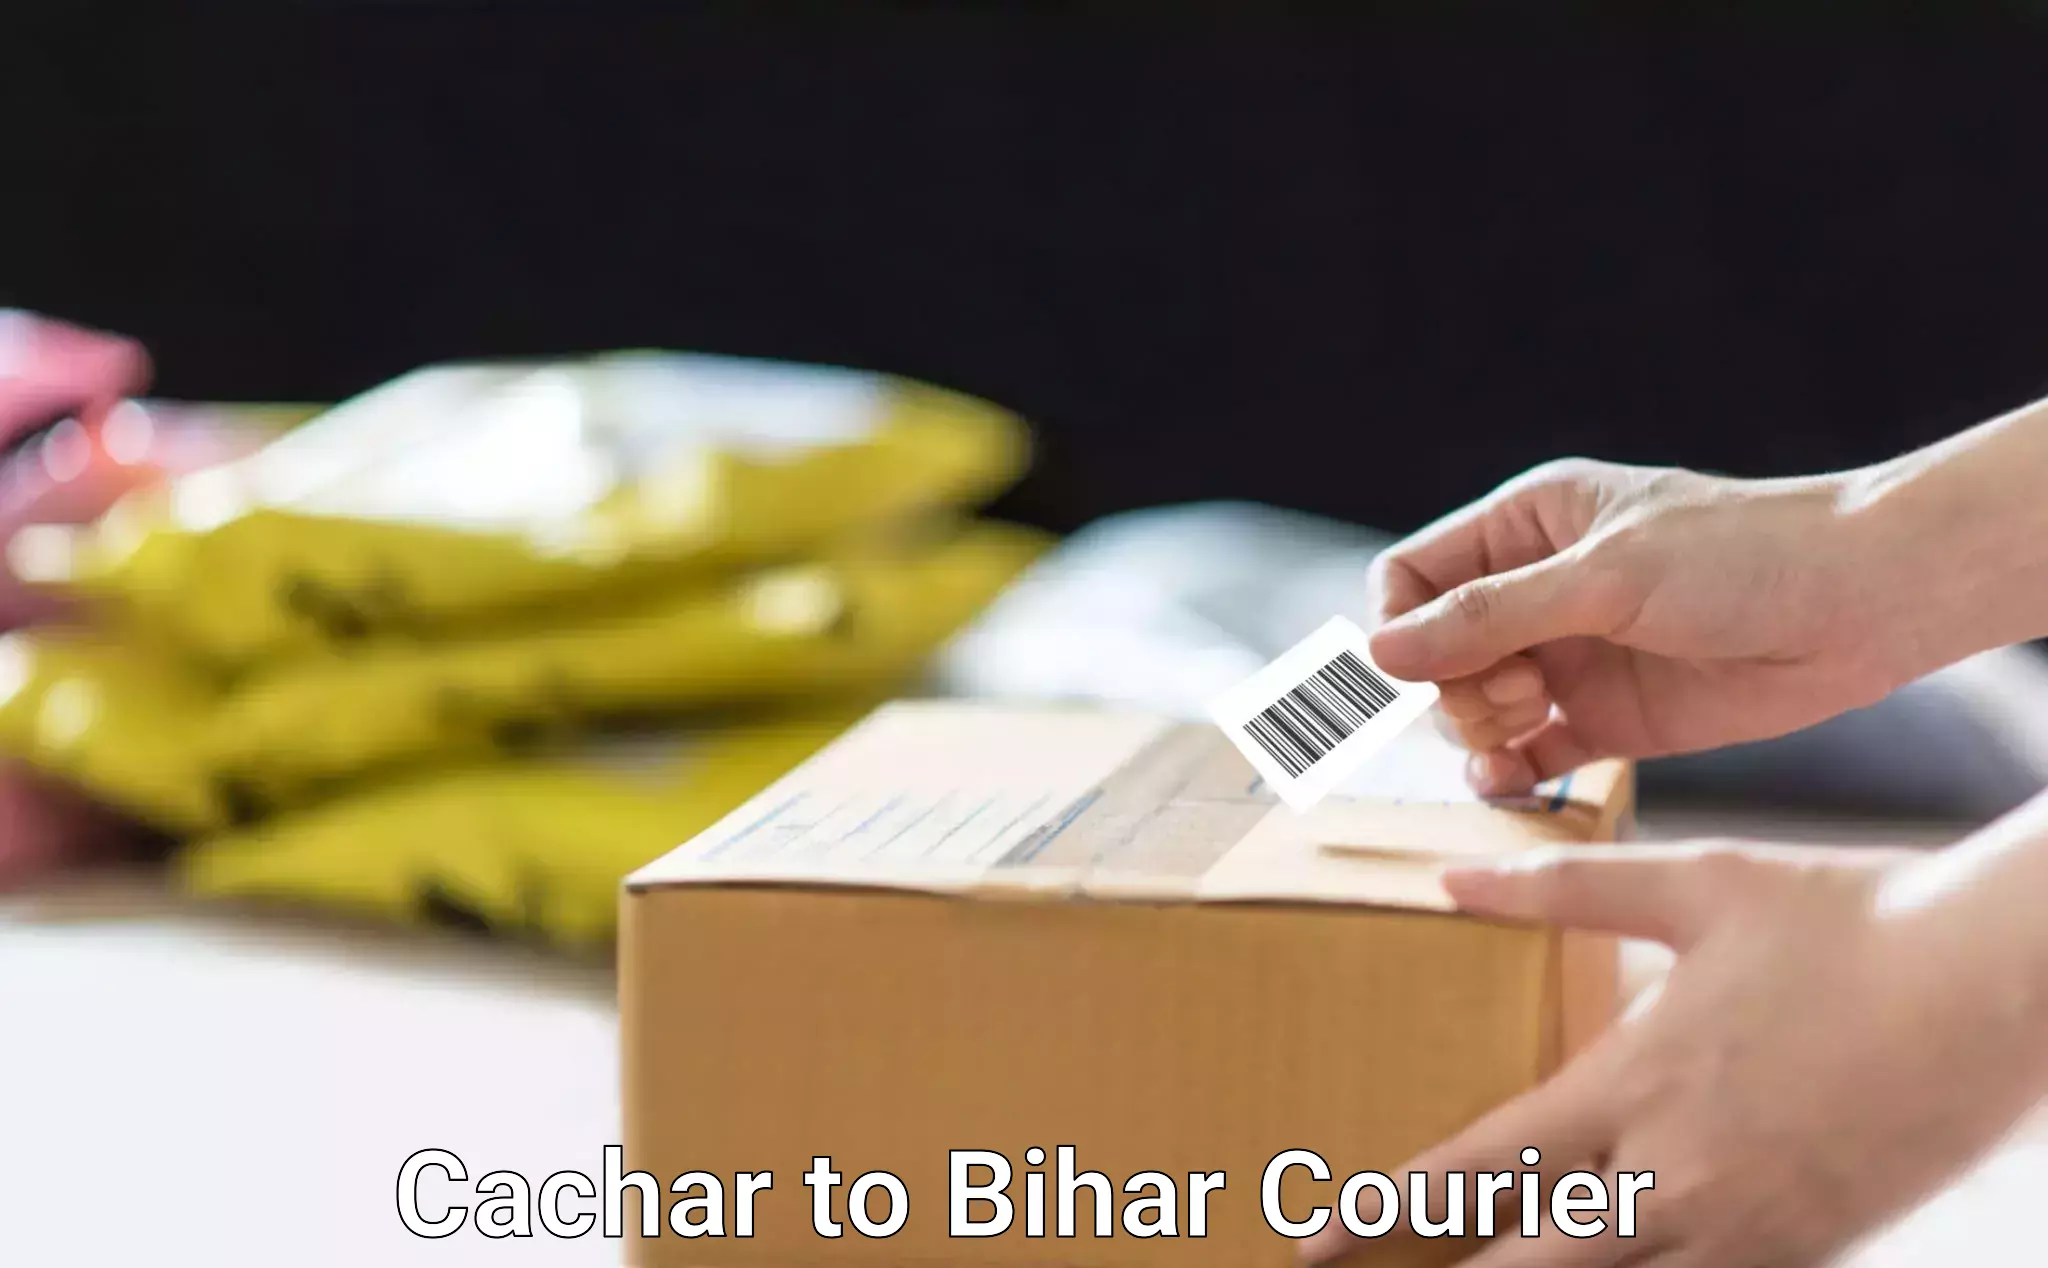 Secure shipping methods Cachar to Gaya